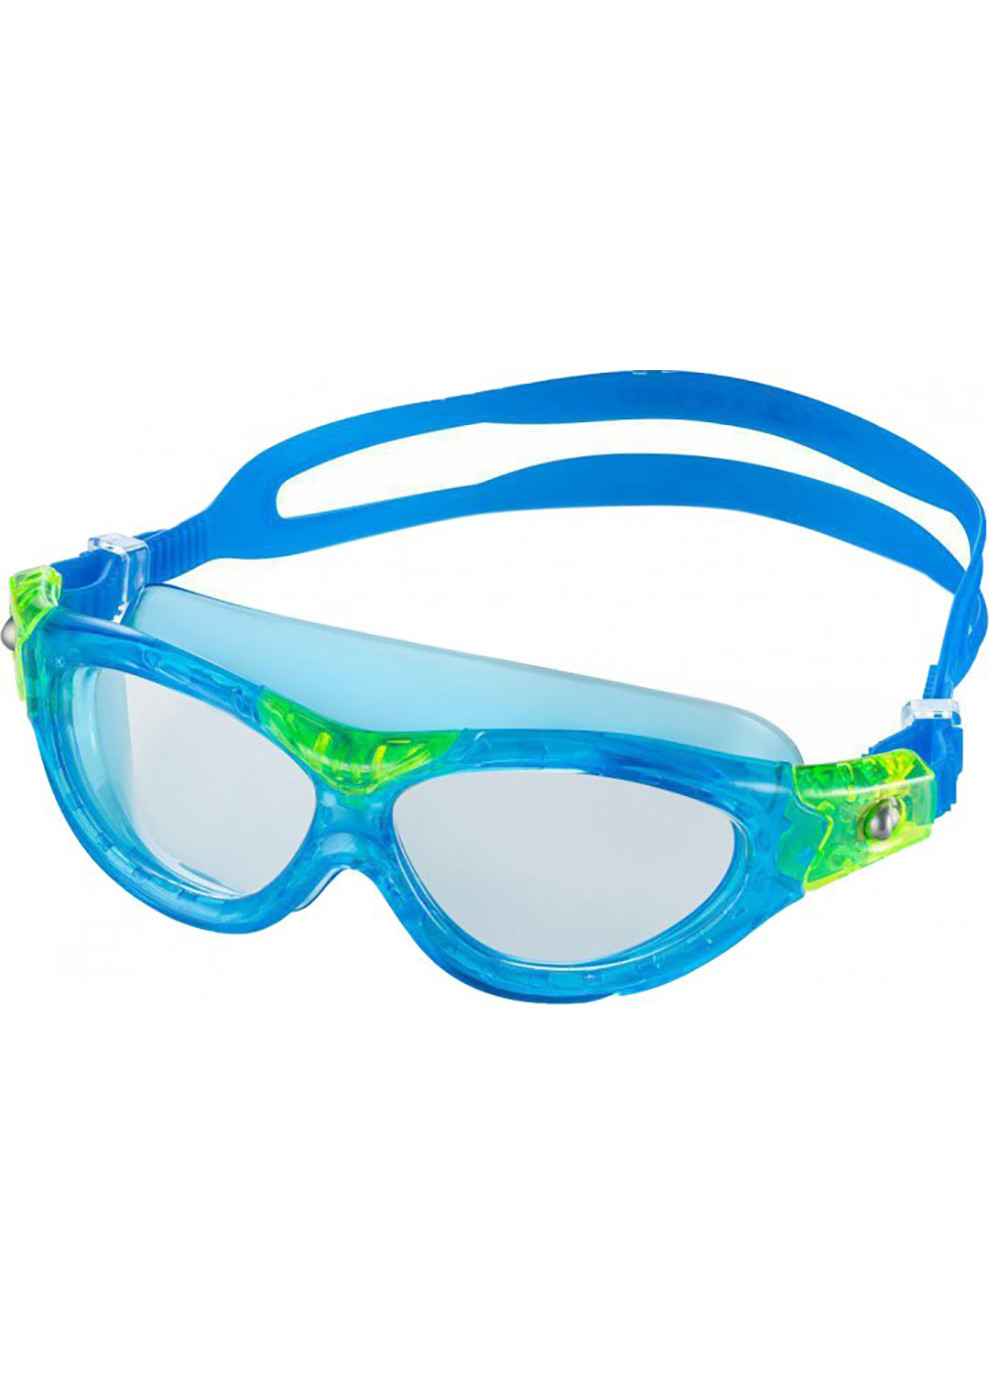 Очки для плавания MARIN KID 9020 голубой, зеленый OSFM Aqua Speed (258140440)